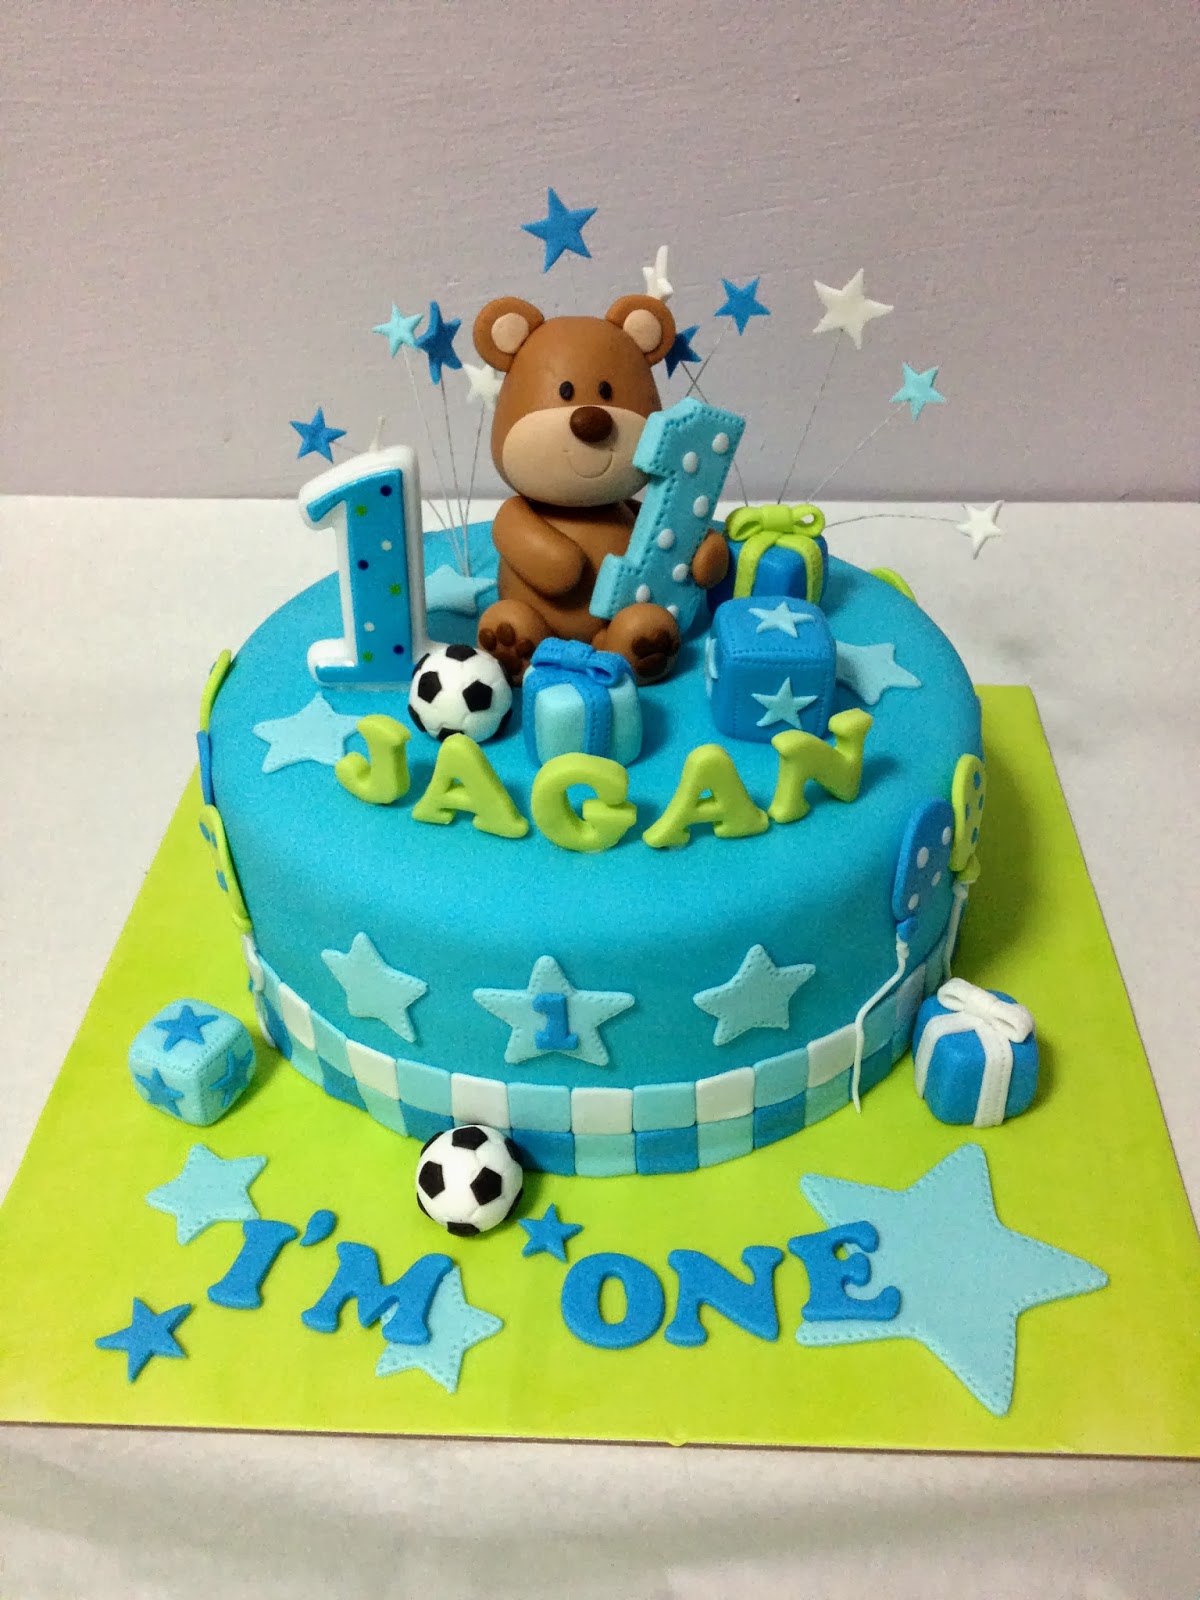 birthday 1st happy cake jagan bear teddy cakes oven creations fondant